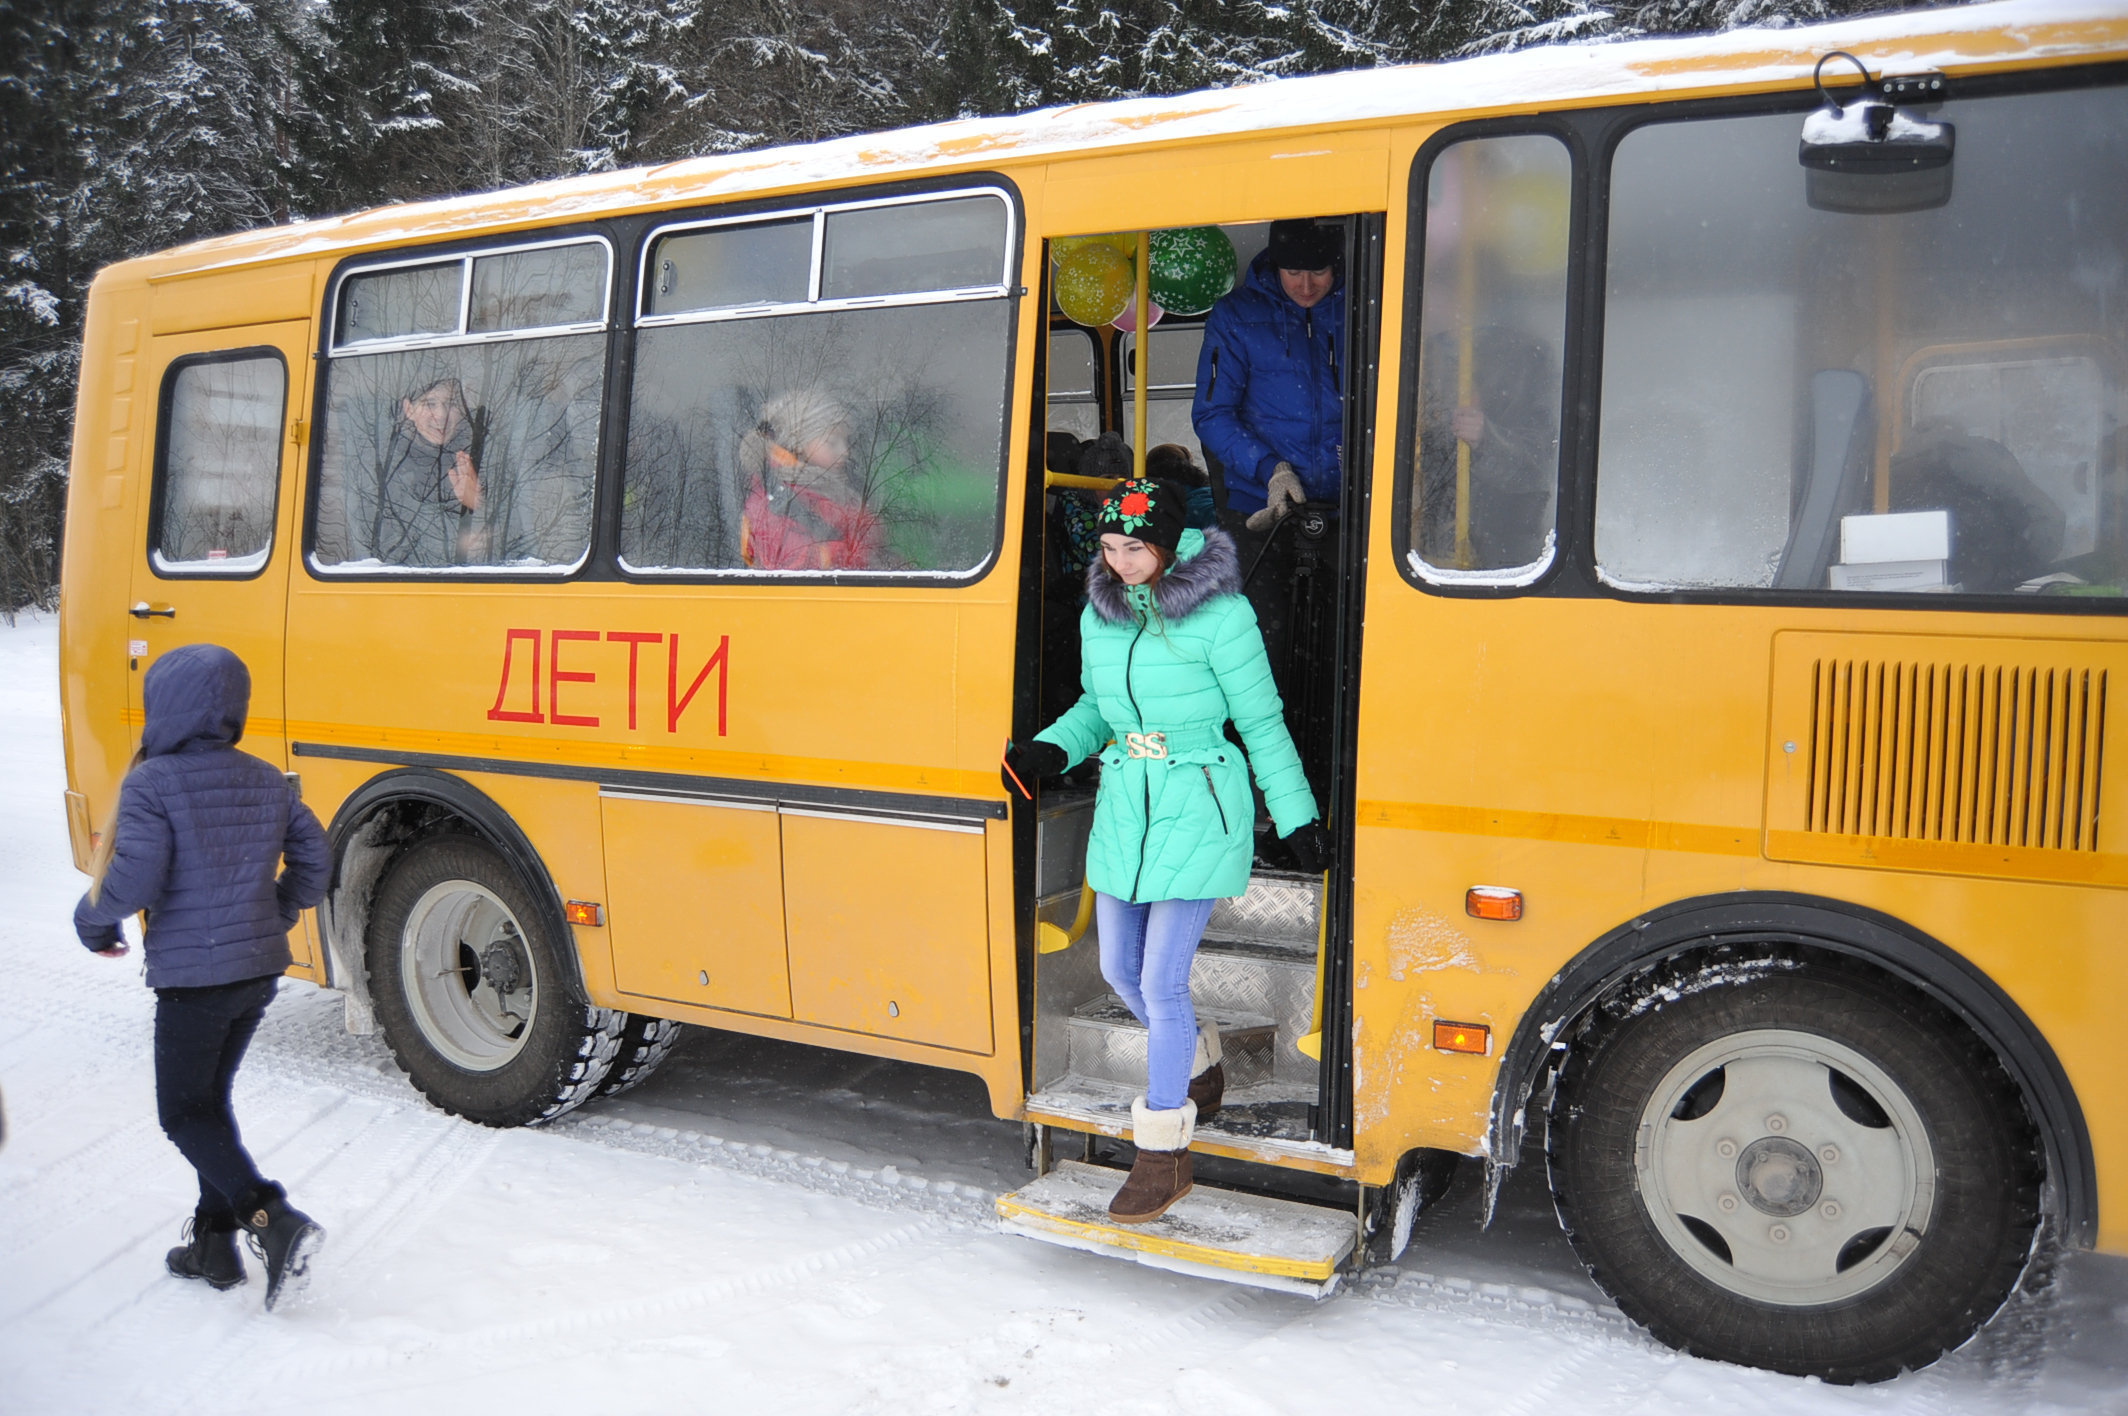 Я езжу в школу на автобусе. Школьный автобус. Автобус для детей. Школьный автобус ПАЗ. Школьный автобус зимой.